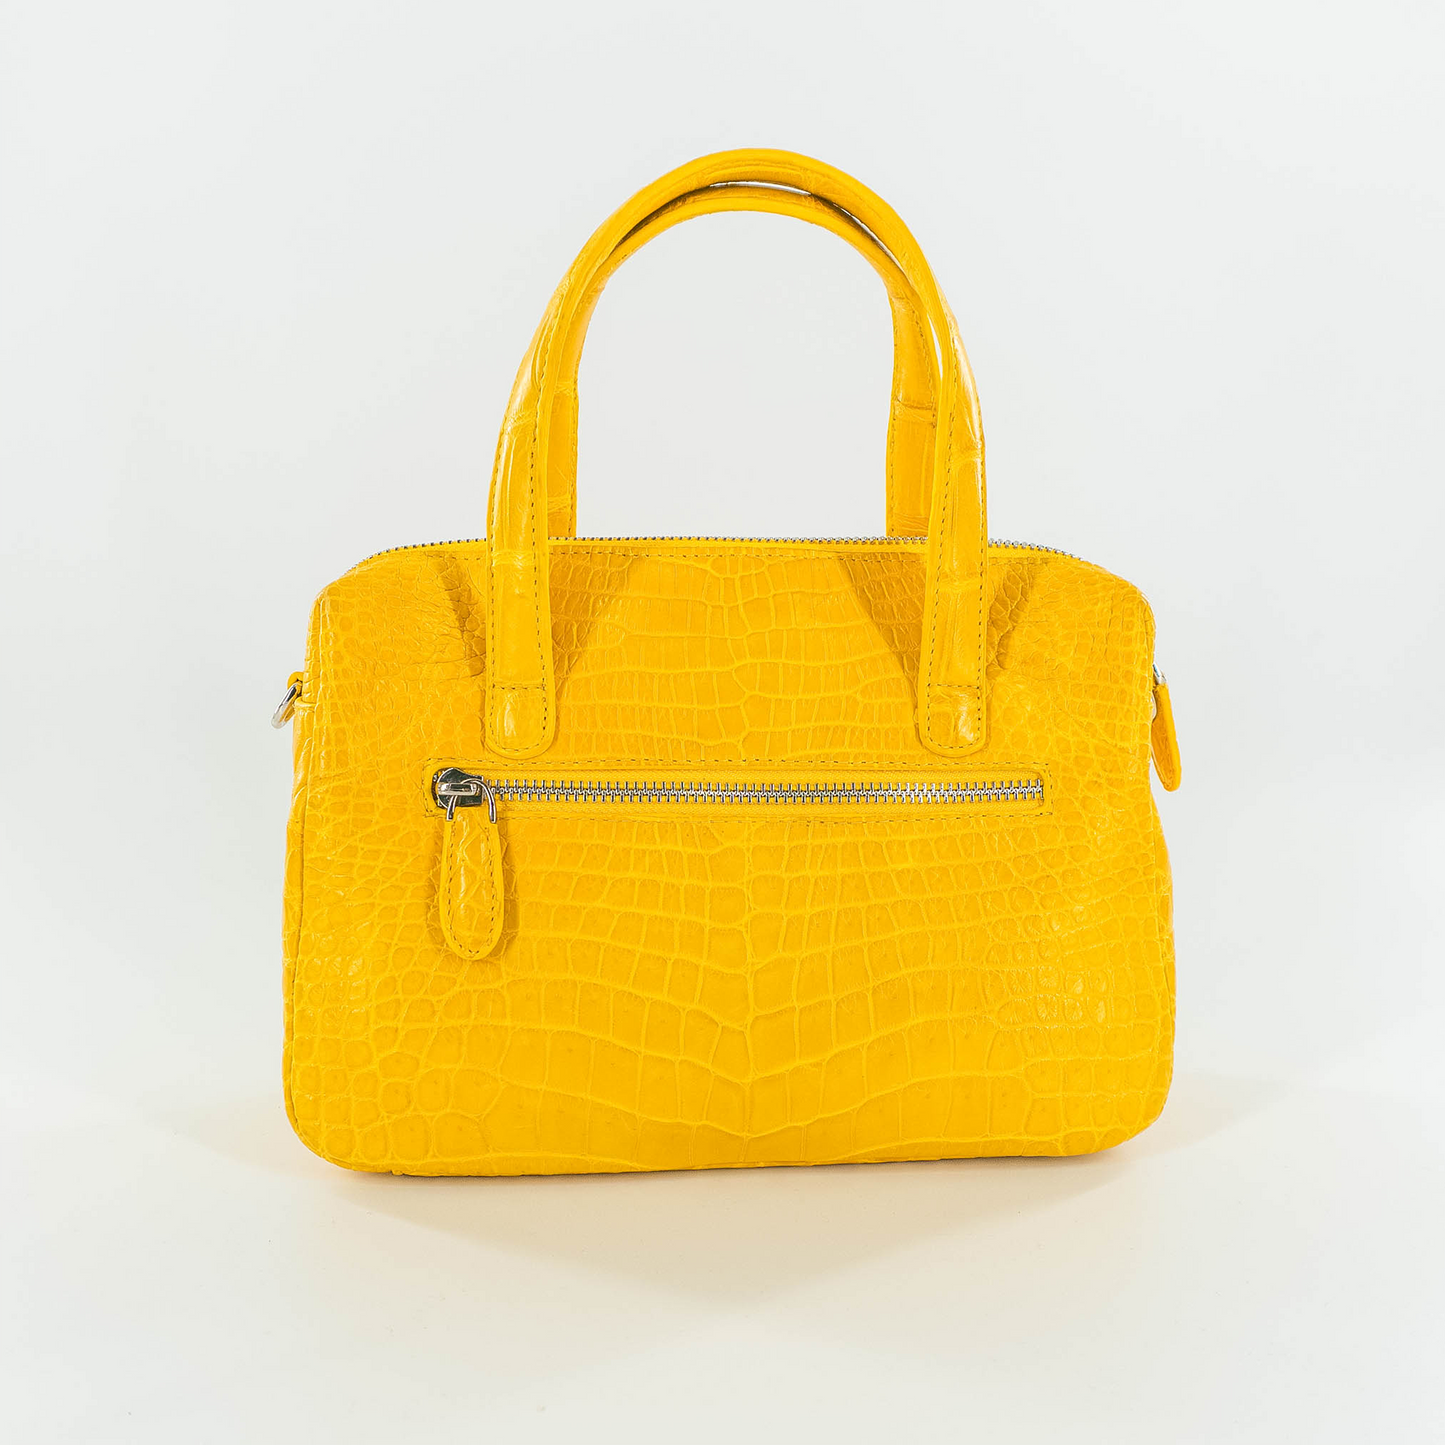 Lily Handbag in Matte Yellow Crocodile Belly Skin